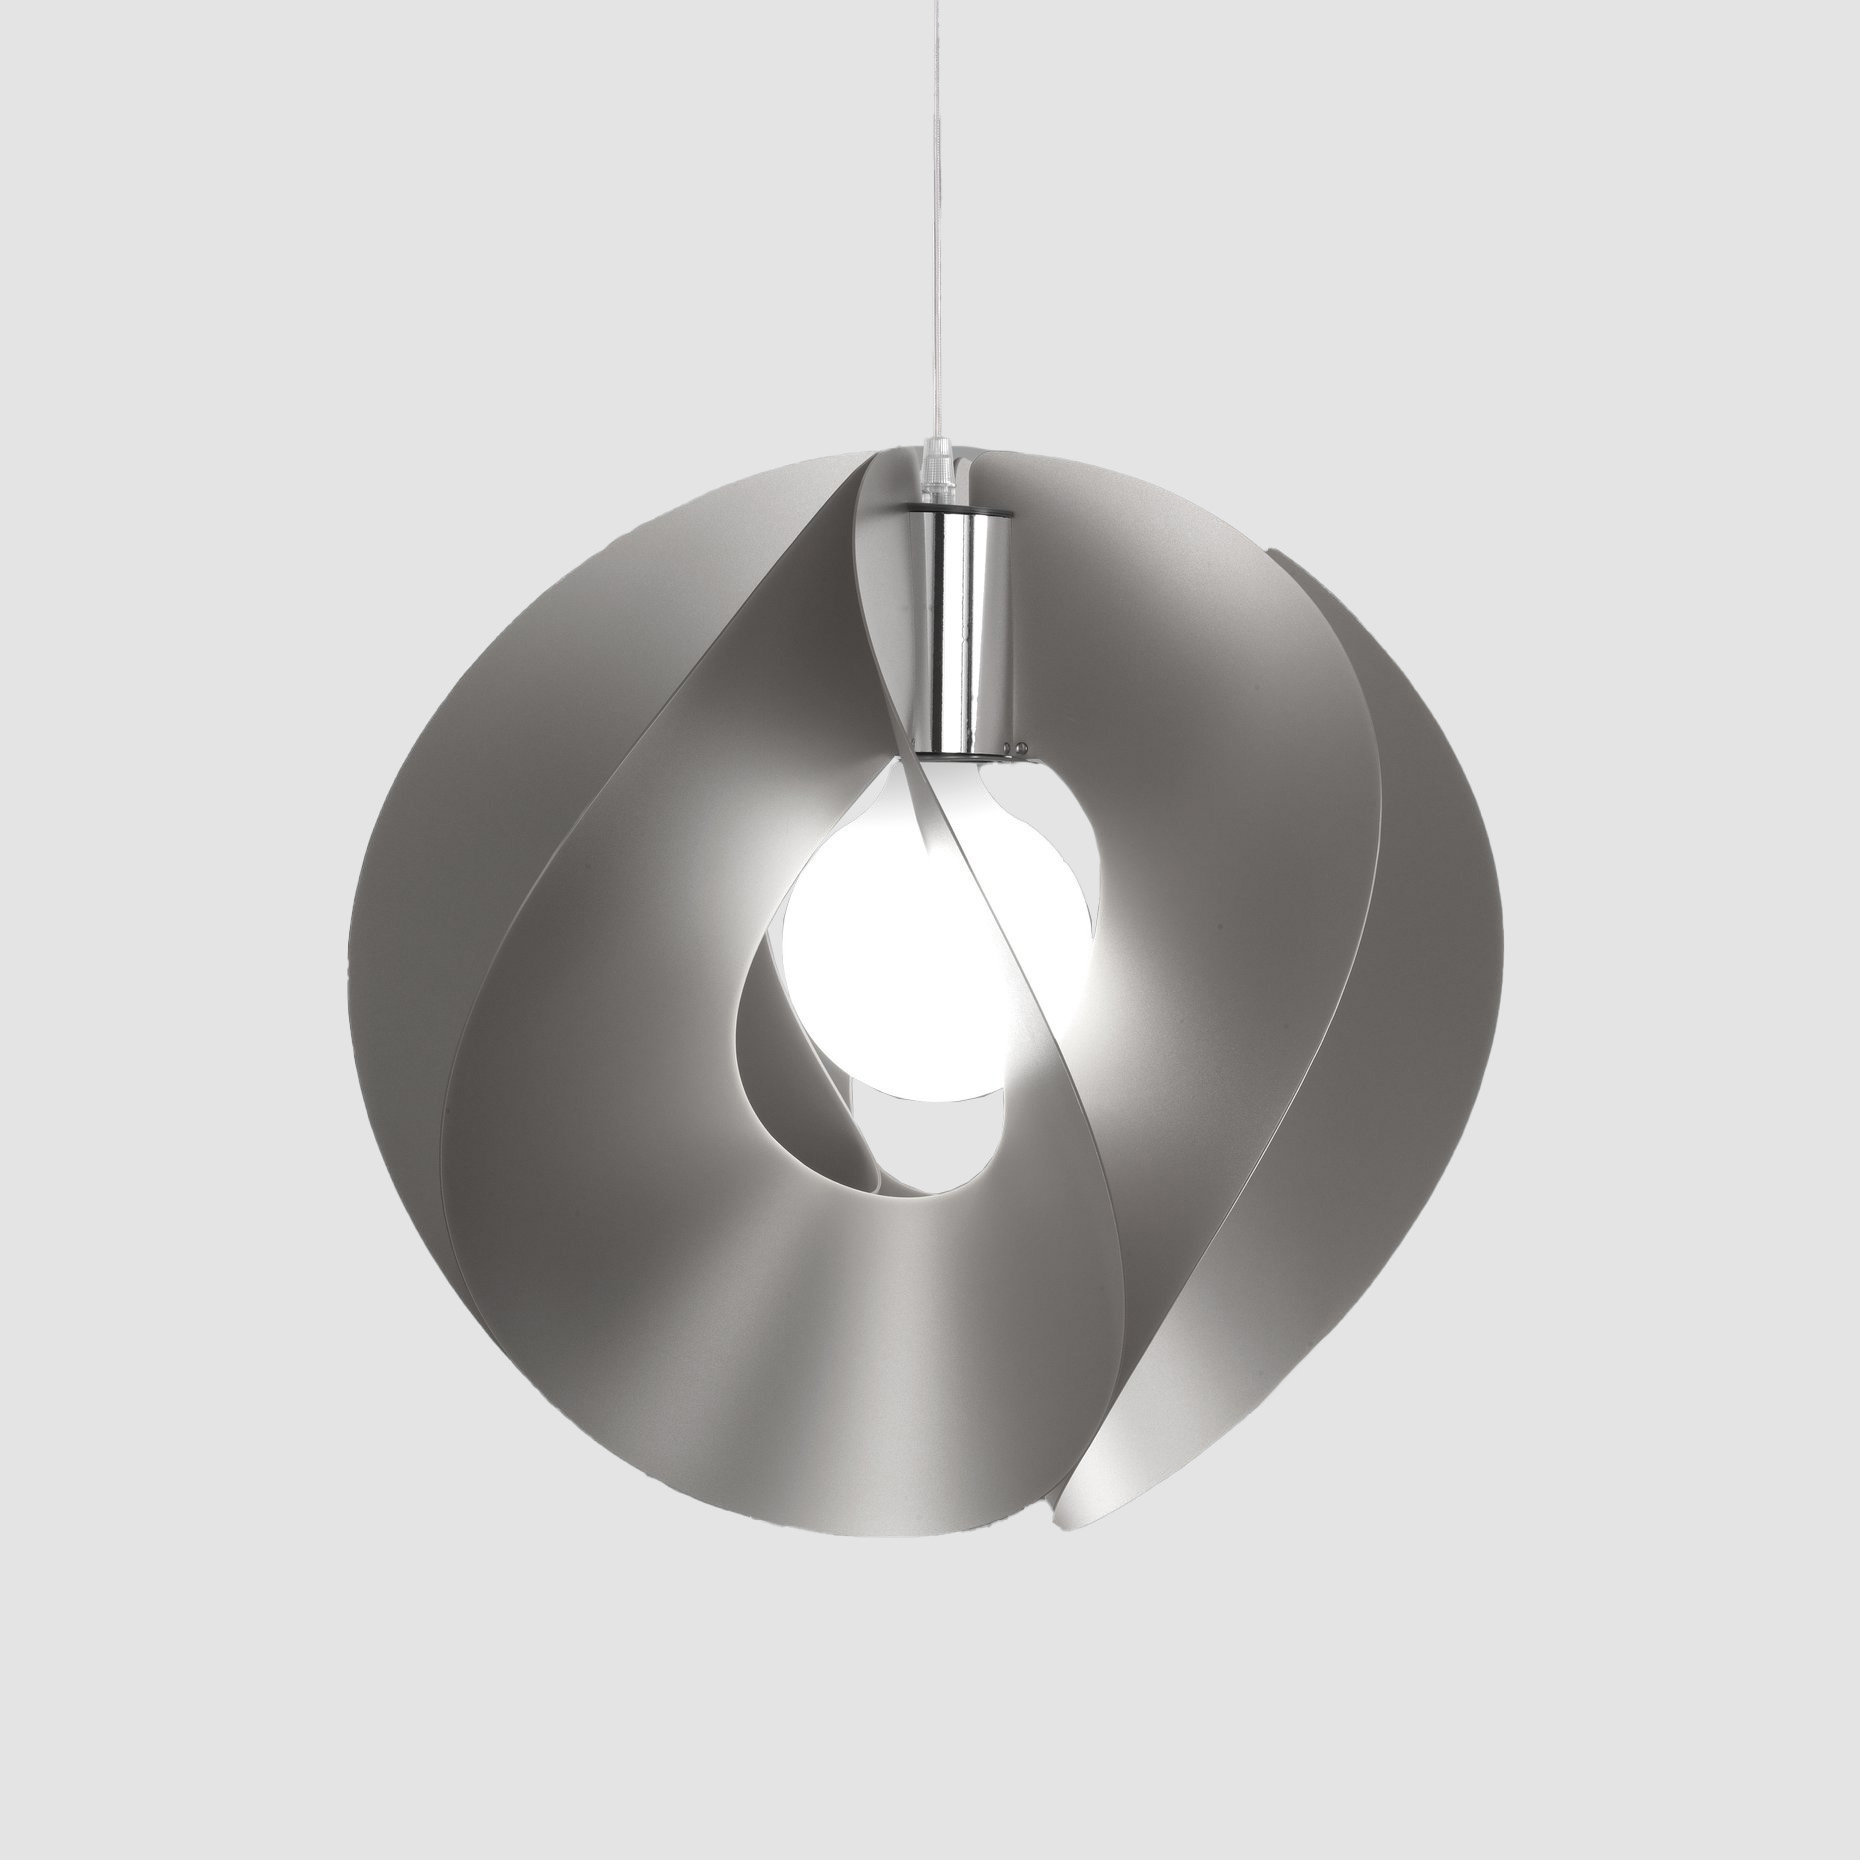 ATOM by Linea Zero - Suspended Ceiling LED Retrofit Fixture